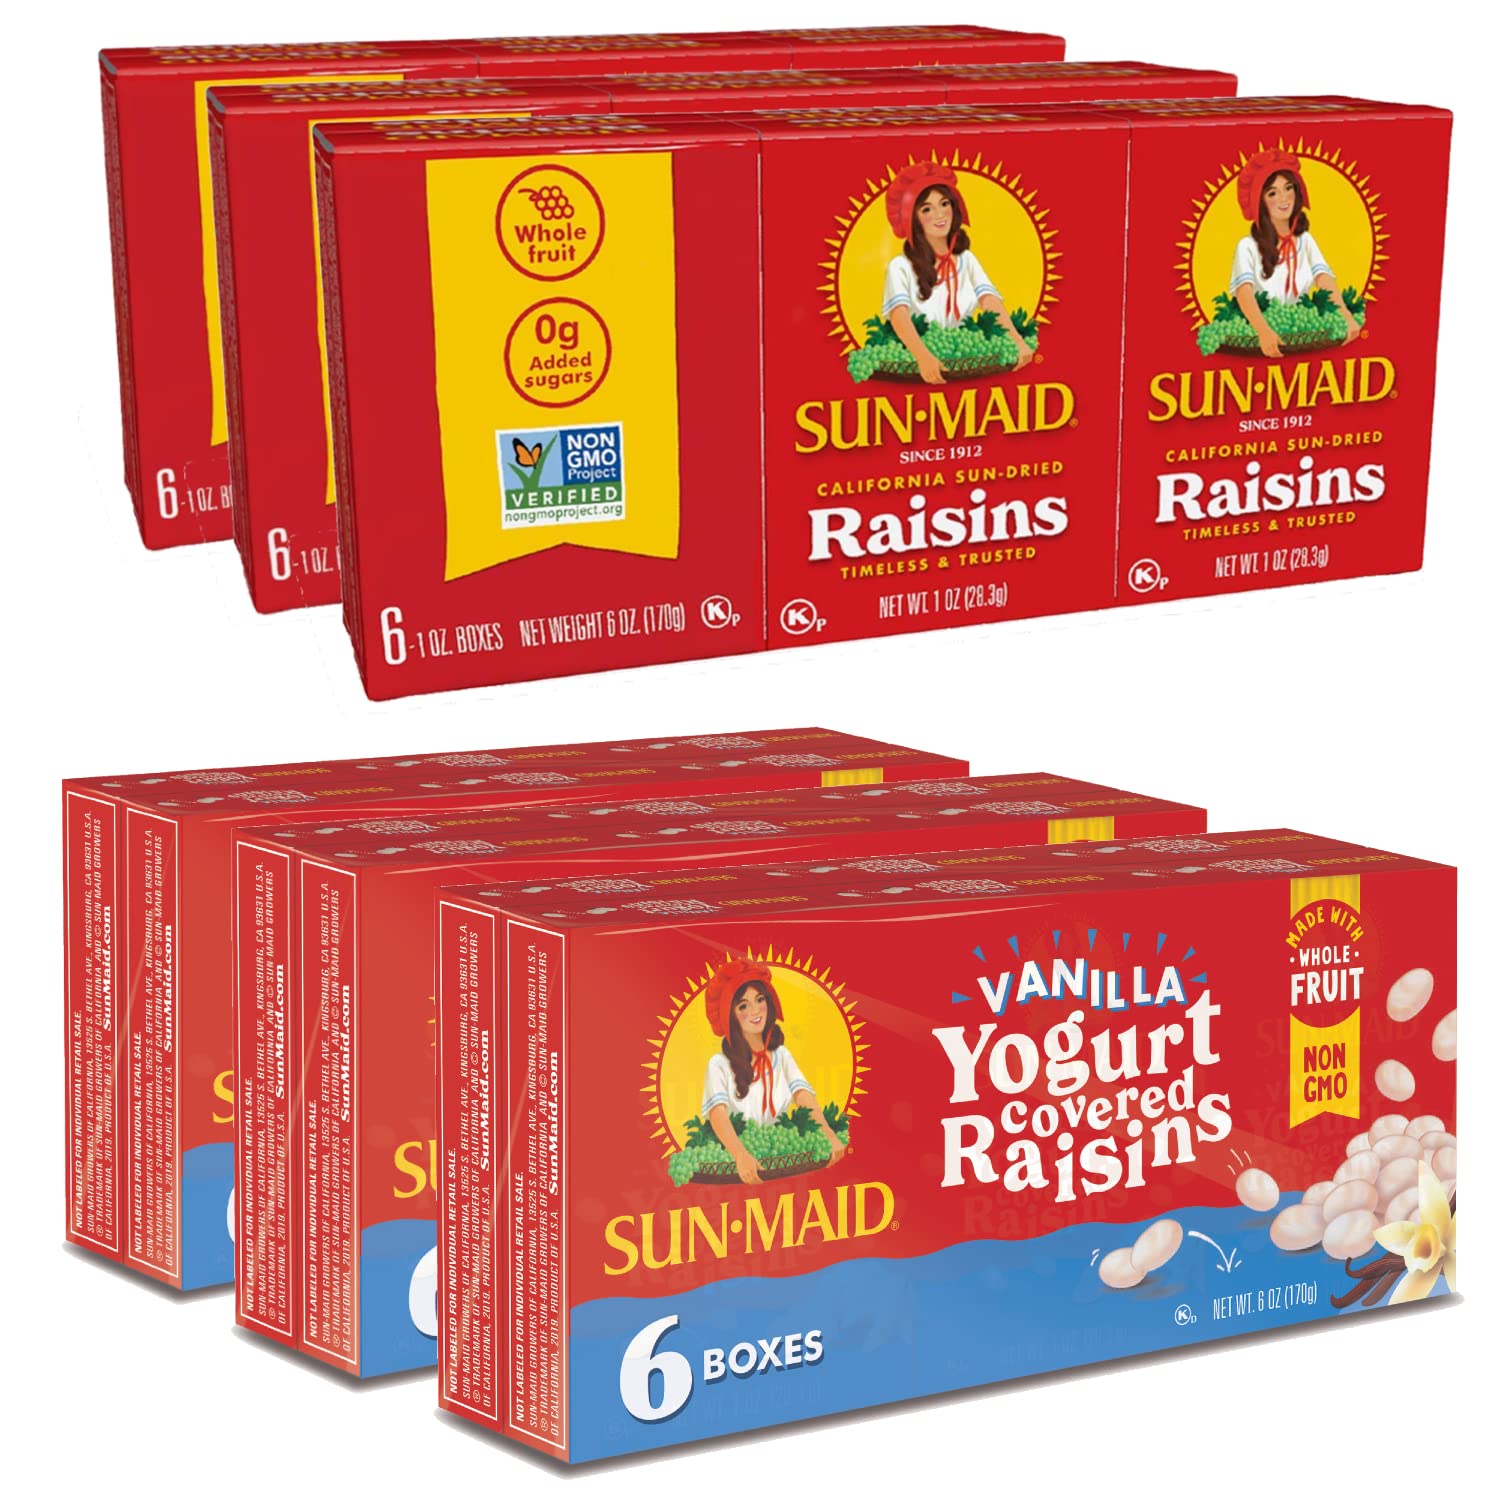 Sun-Maid California Sun-Dried Raisins & Vanilla Yogurt Coated Raisins (6 Pack) Snack-Size Box - Dried Fruit Snack for Lunches and Snacks